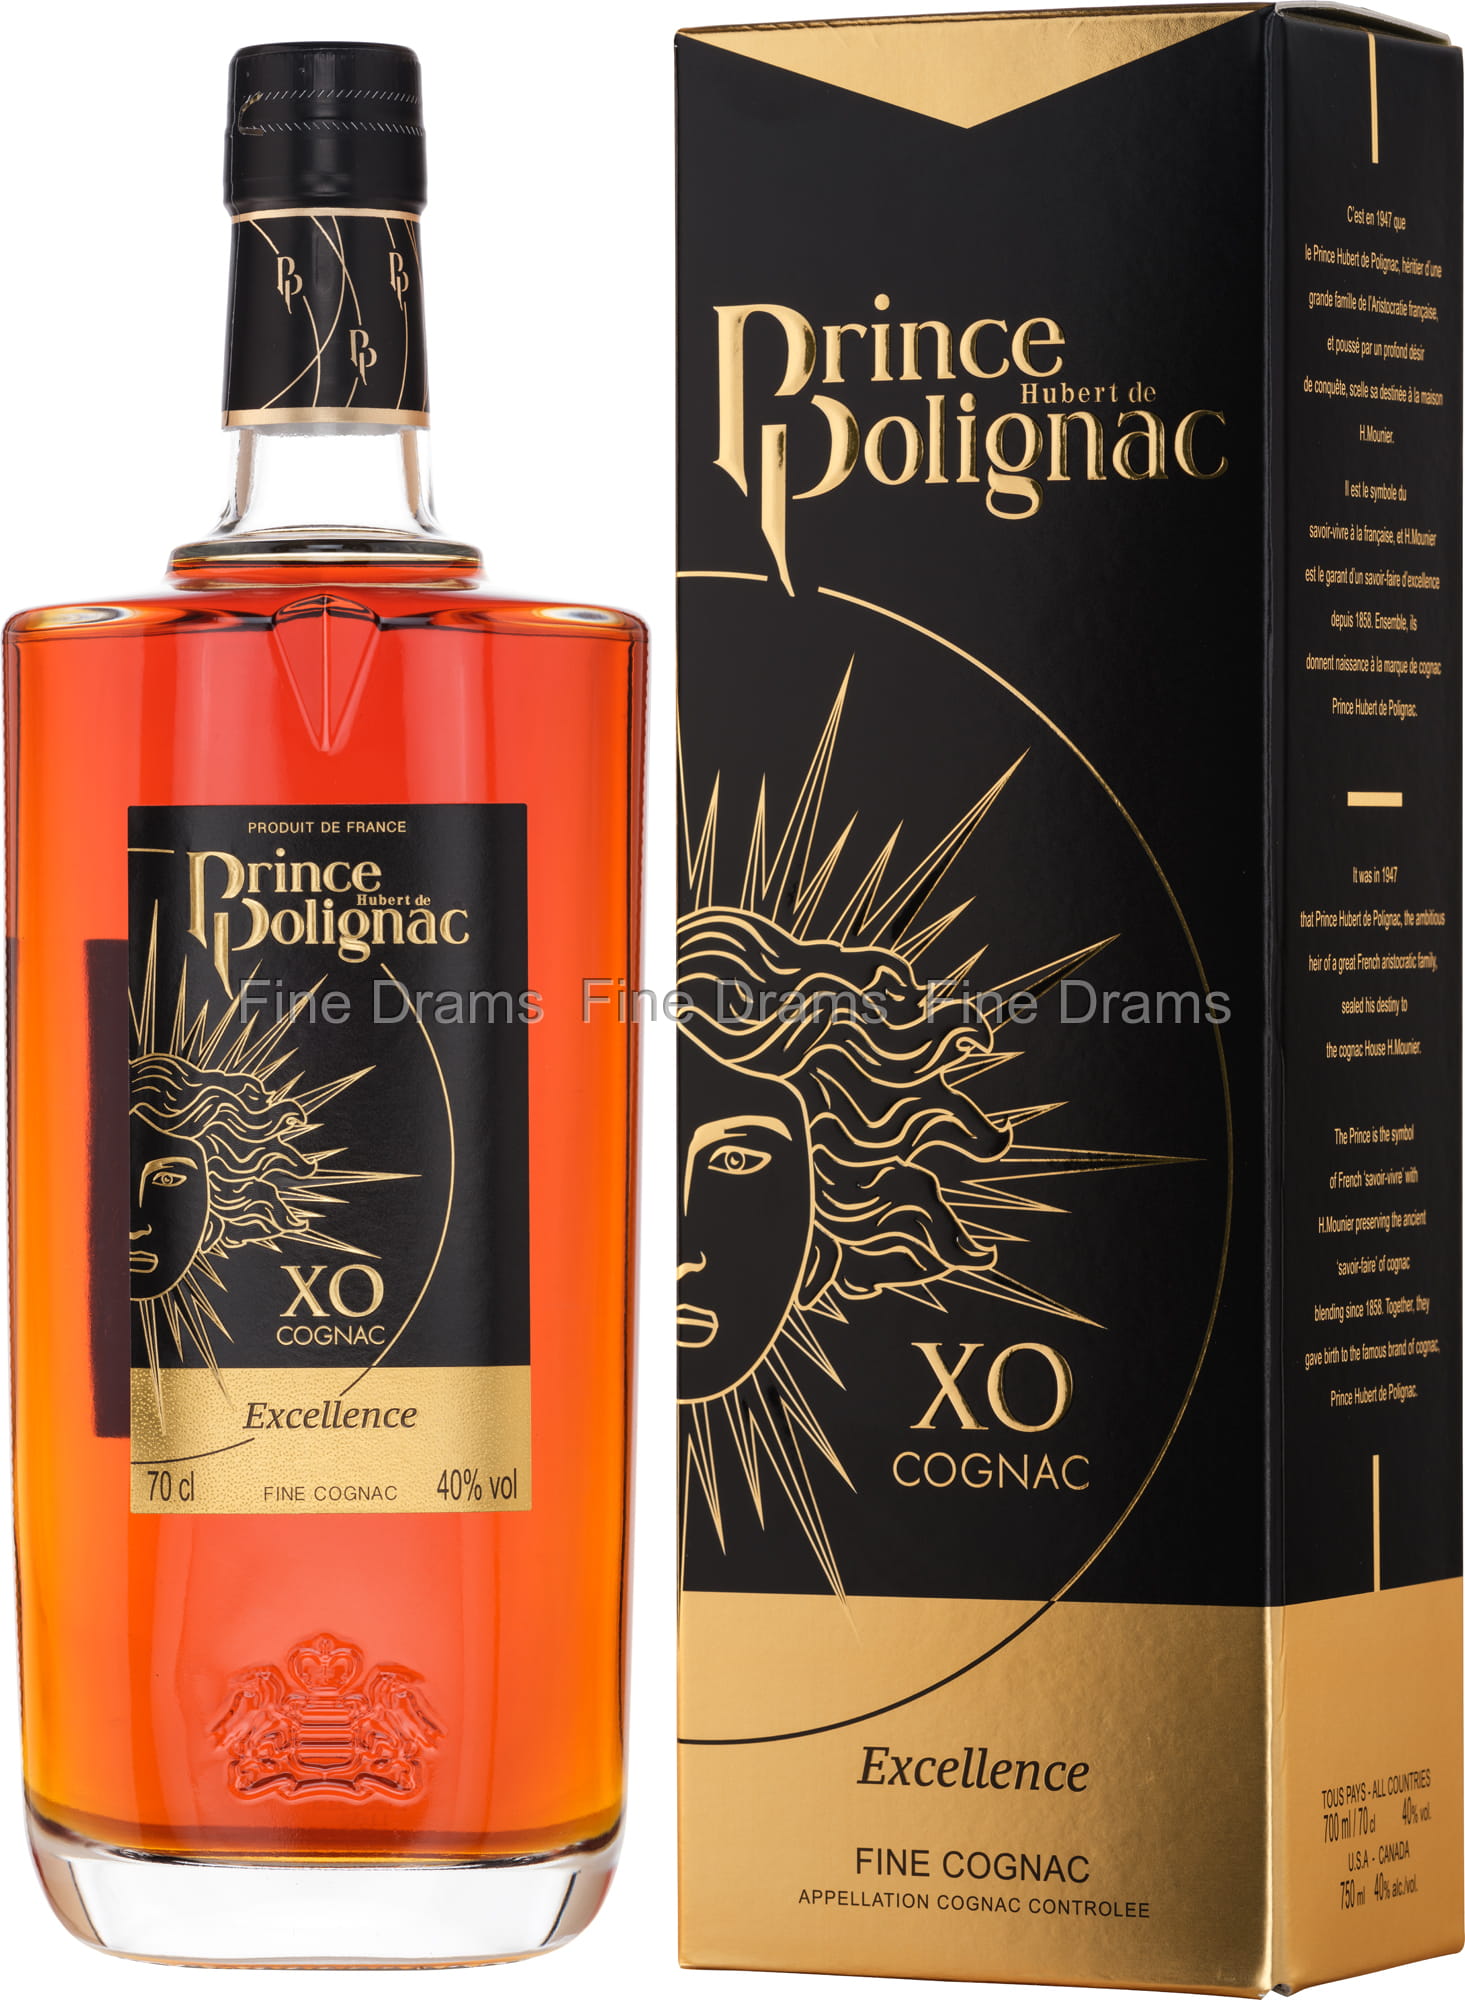 Prince Hubert Polignac XO Cognac